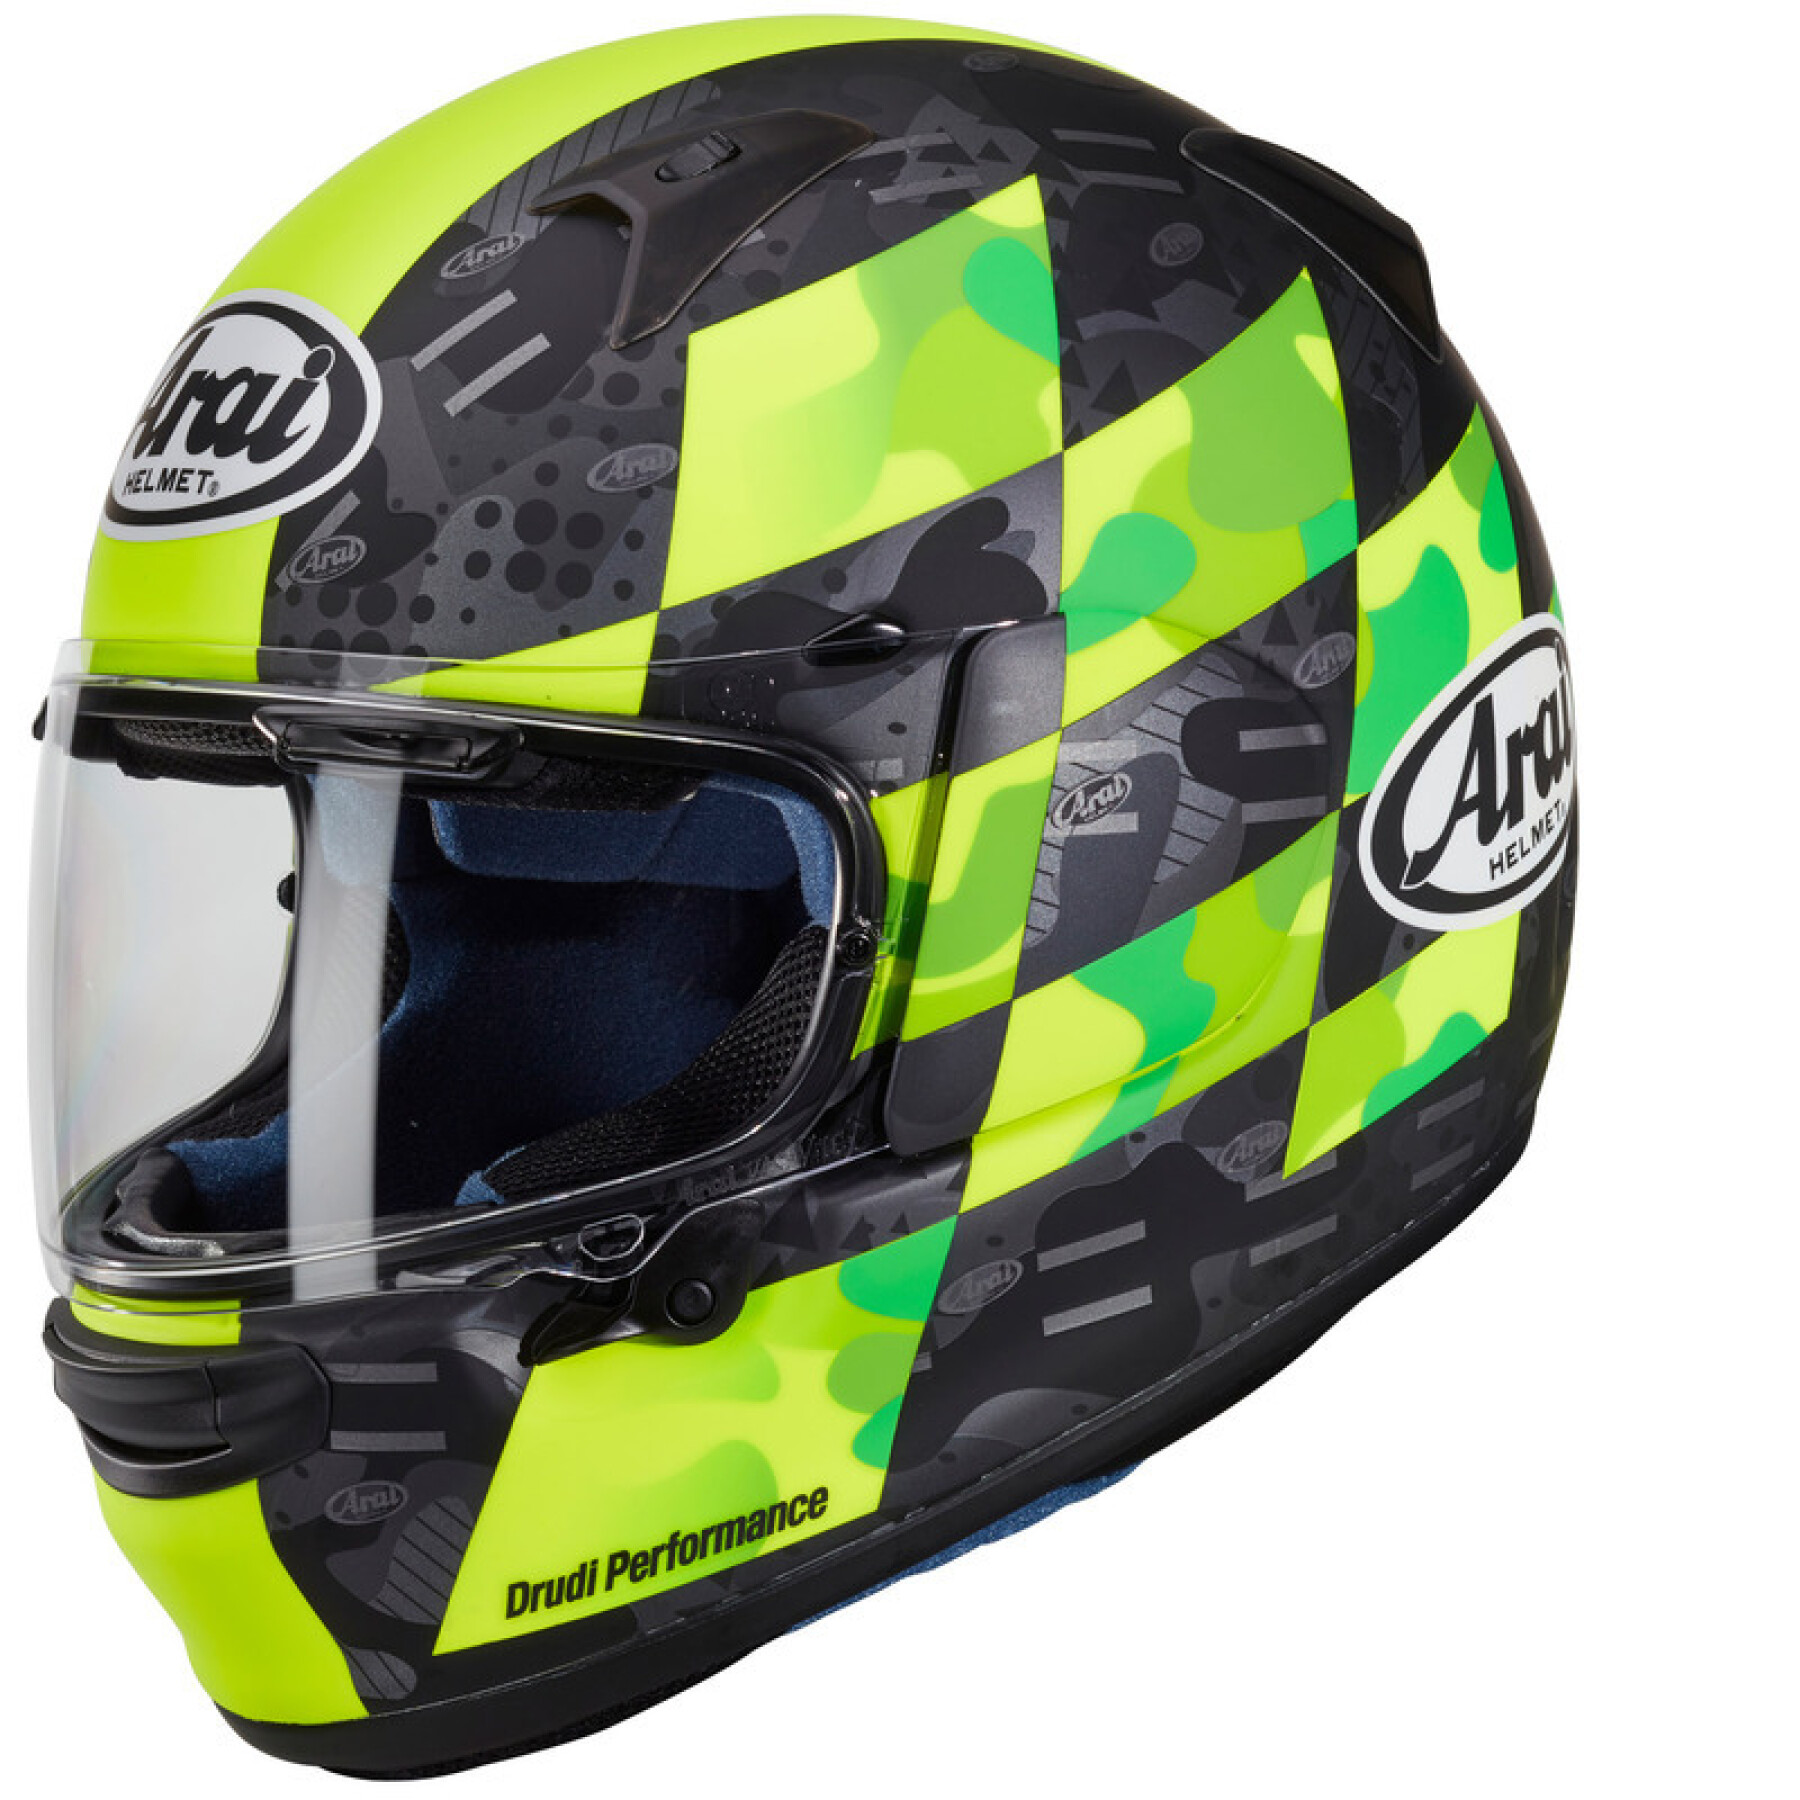 Full face motorcycle helmet Arai Profil-V Patch